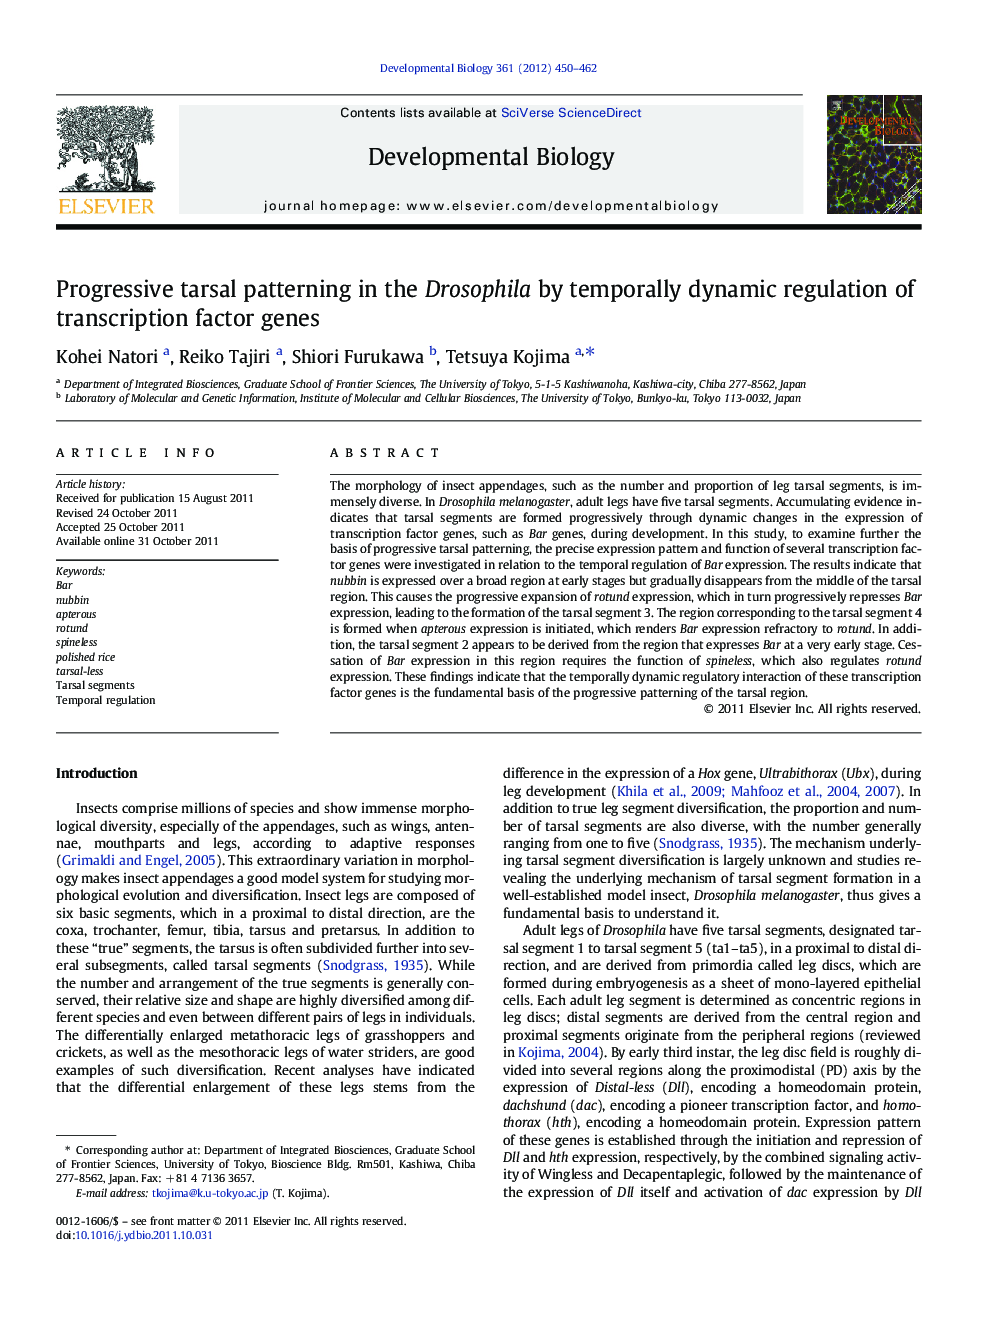 Progressive tarsal patterning in the Drosophila by temporally dynamic regulation of transcription factor genes